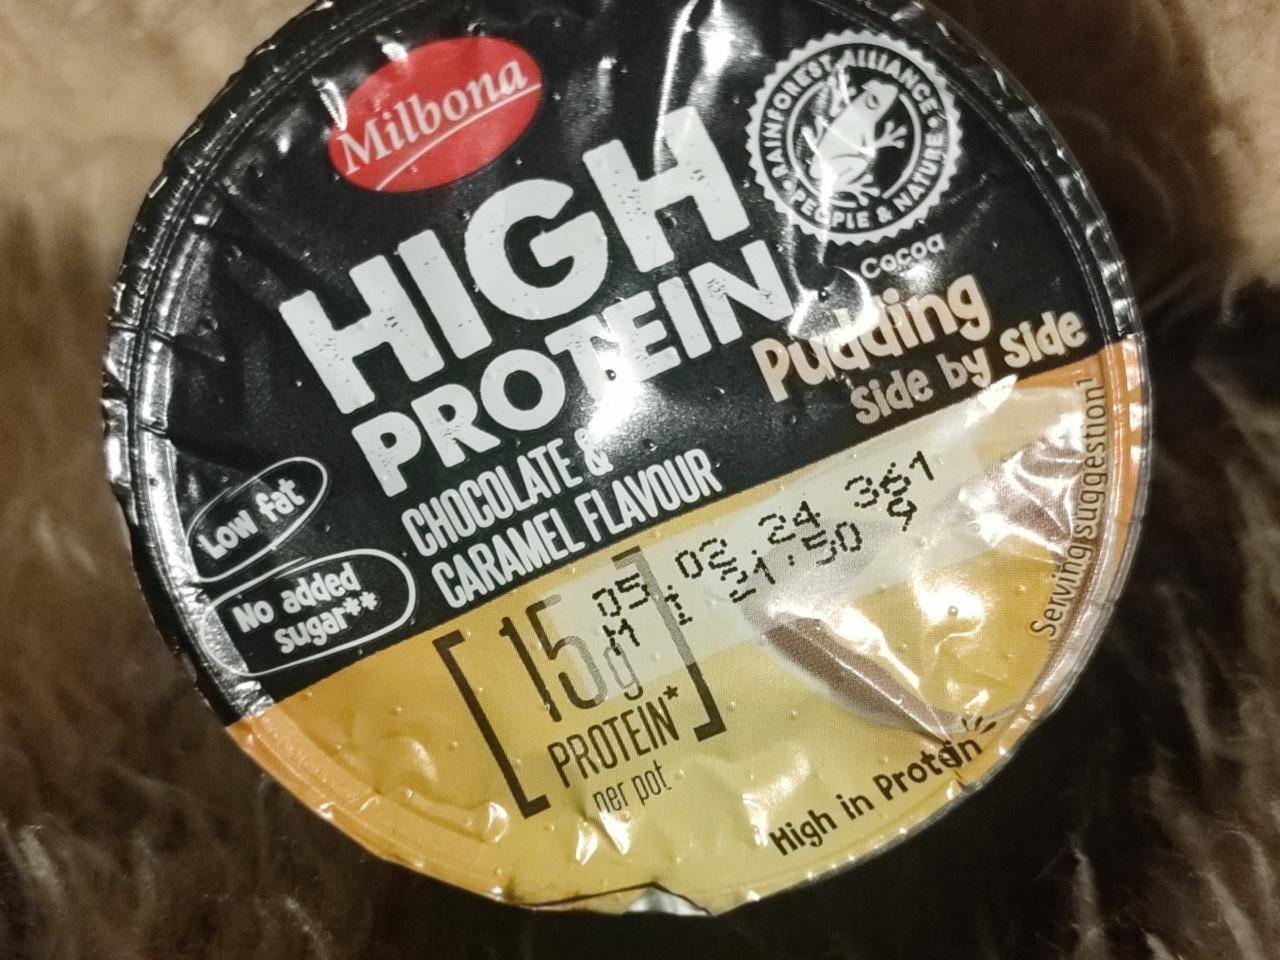 Fotografie - High Protein Chocolate & Caramel Flavour Pudding Milbona